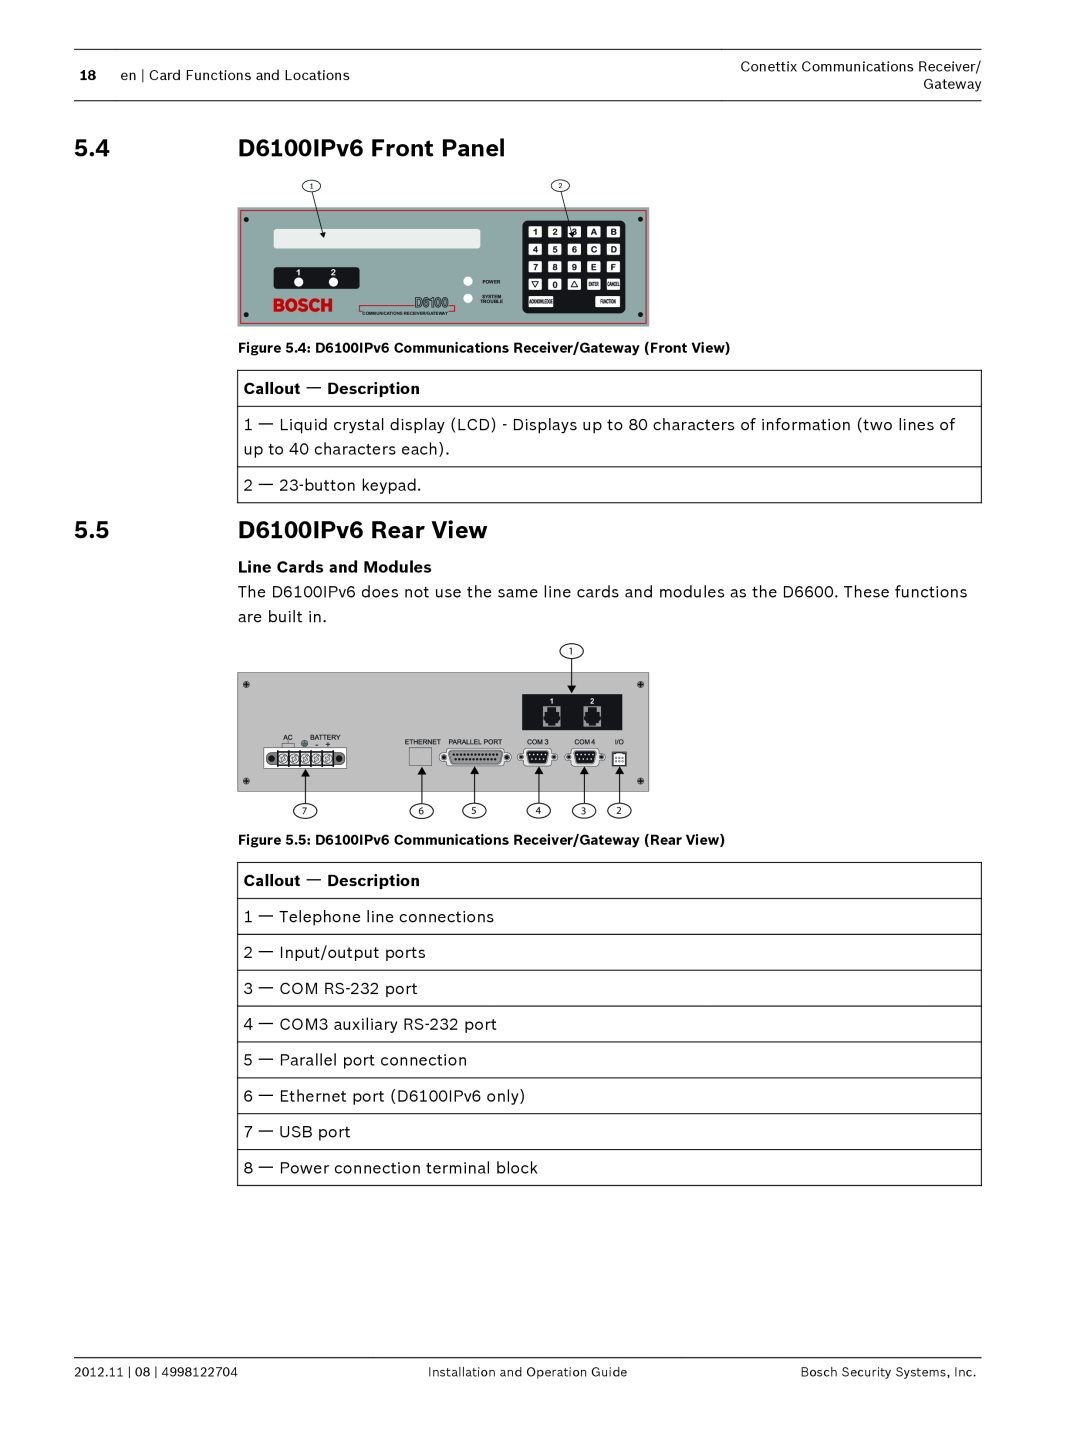 Bosch Appliances D6600 D6100IPv6 Rear View, Callout ᅳ Description, Line Cards and Modules, are built in 